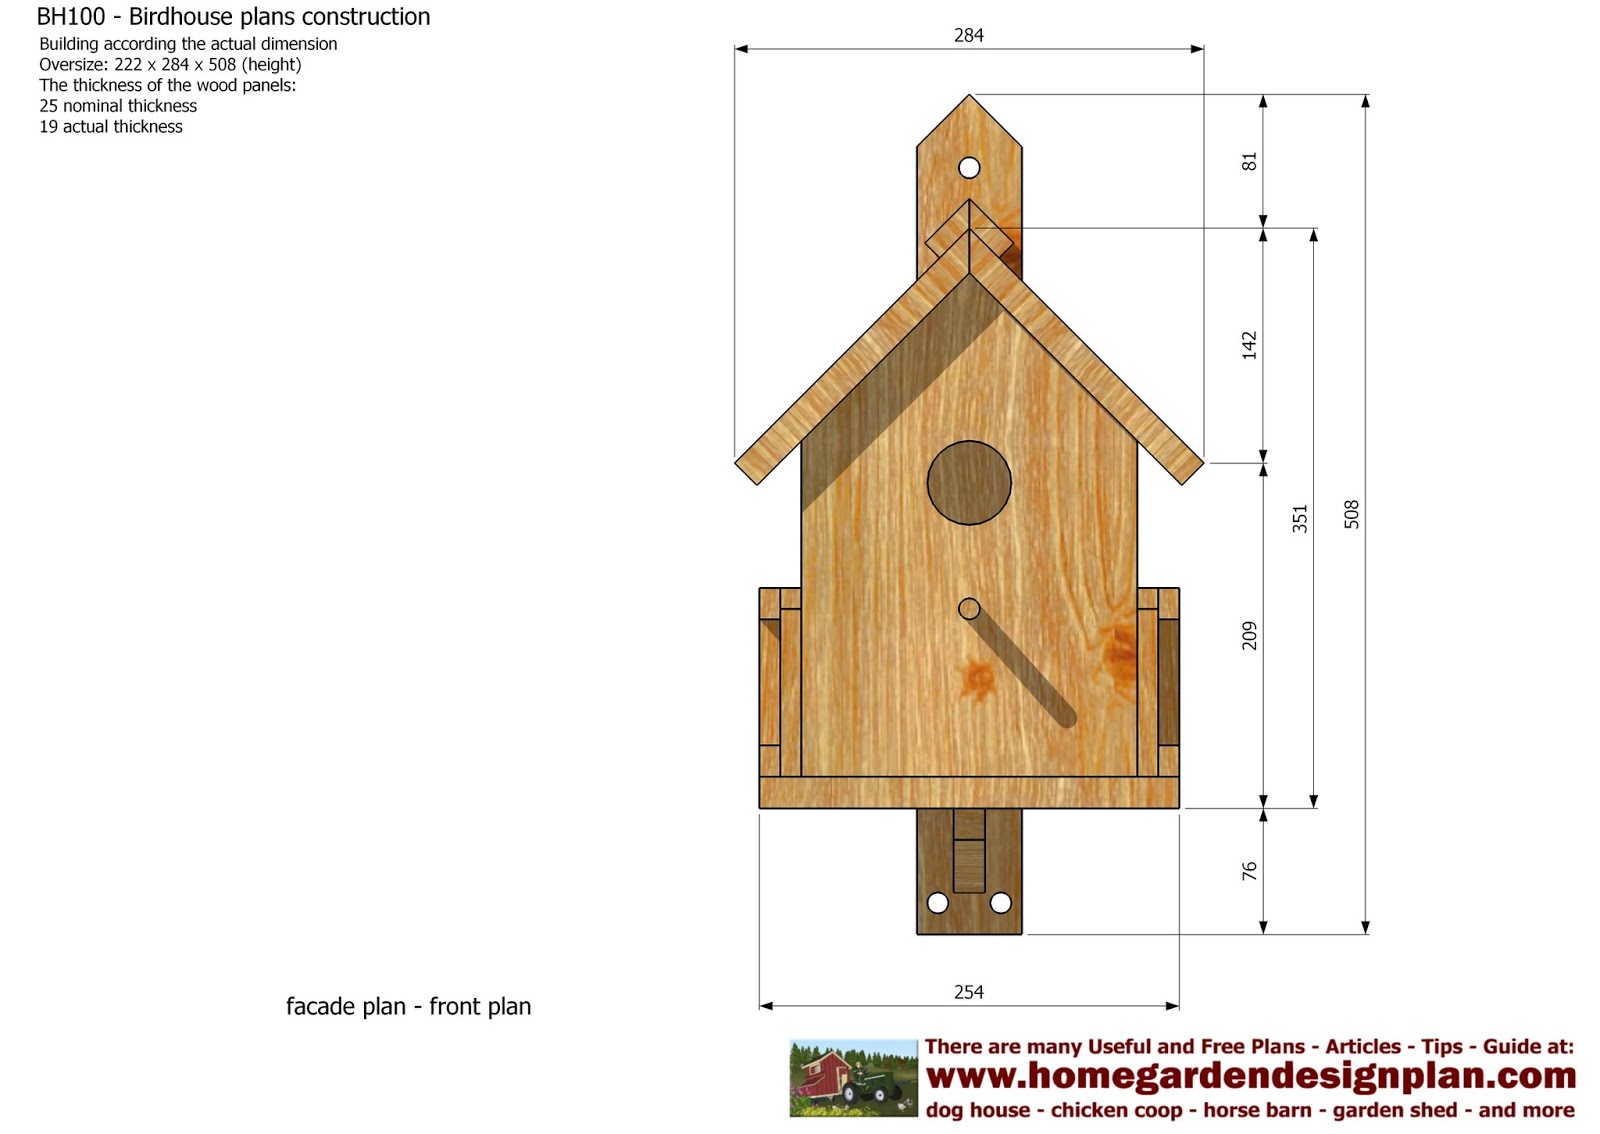 build-a-coop-blog-bh100-bird-house-plans-construction-bird-house